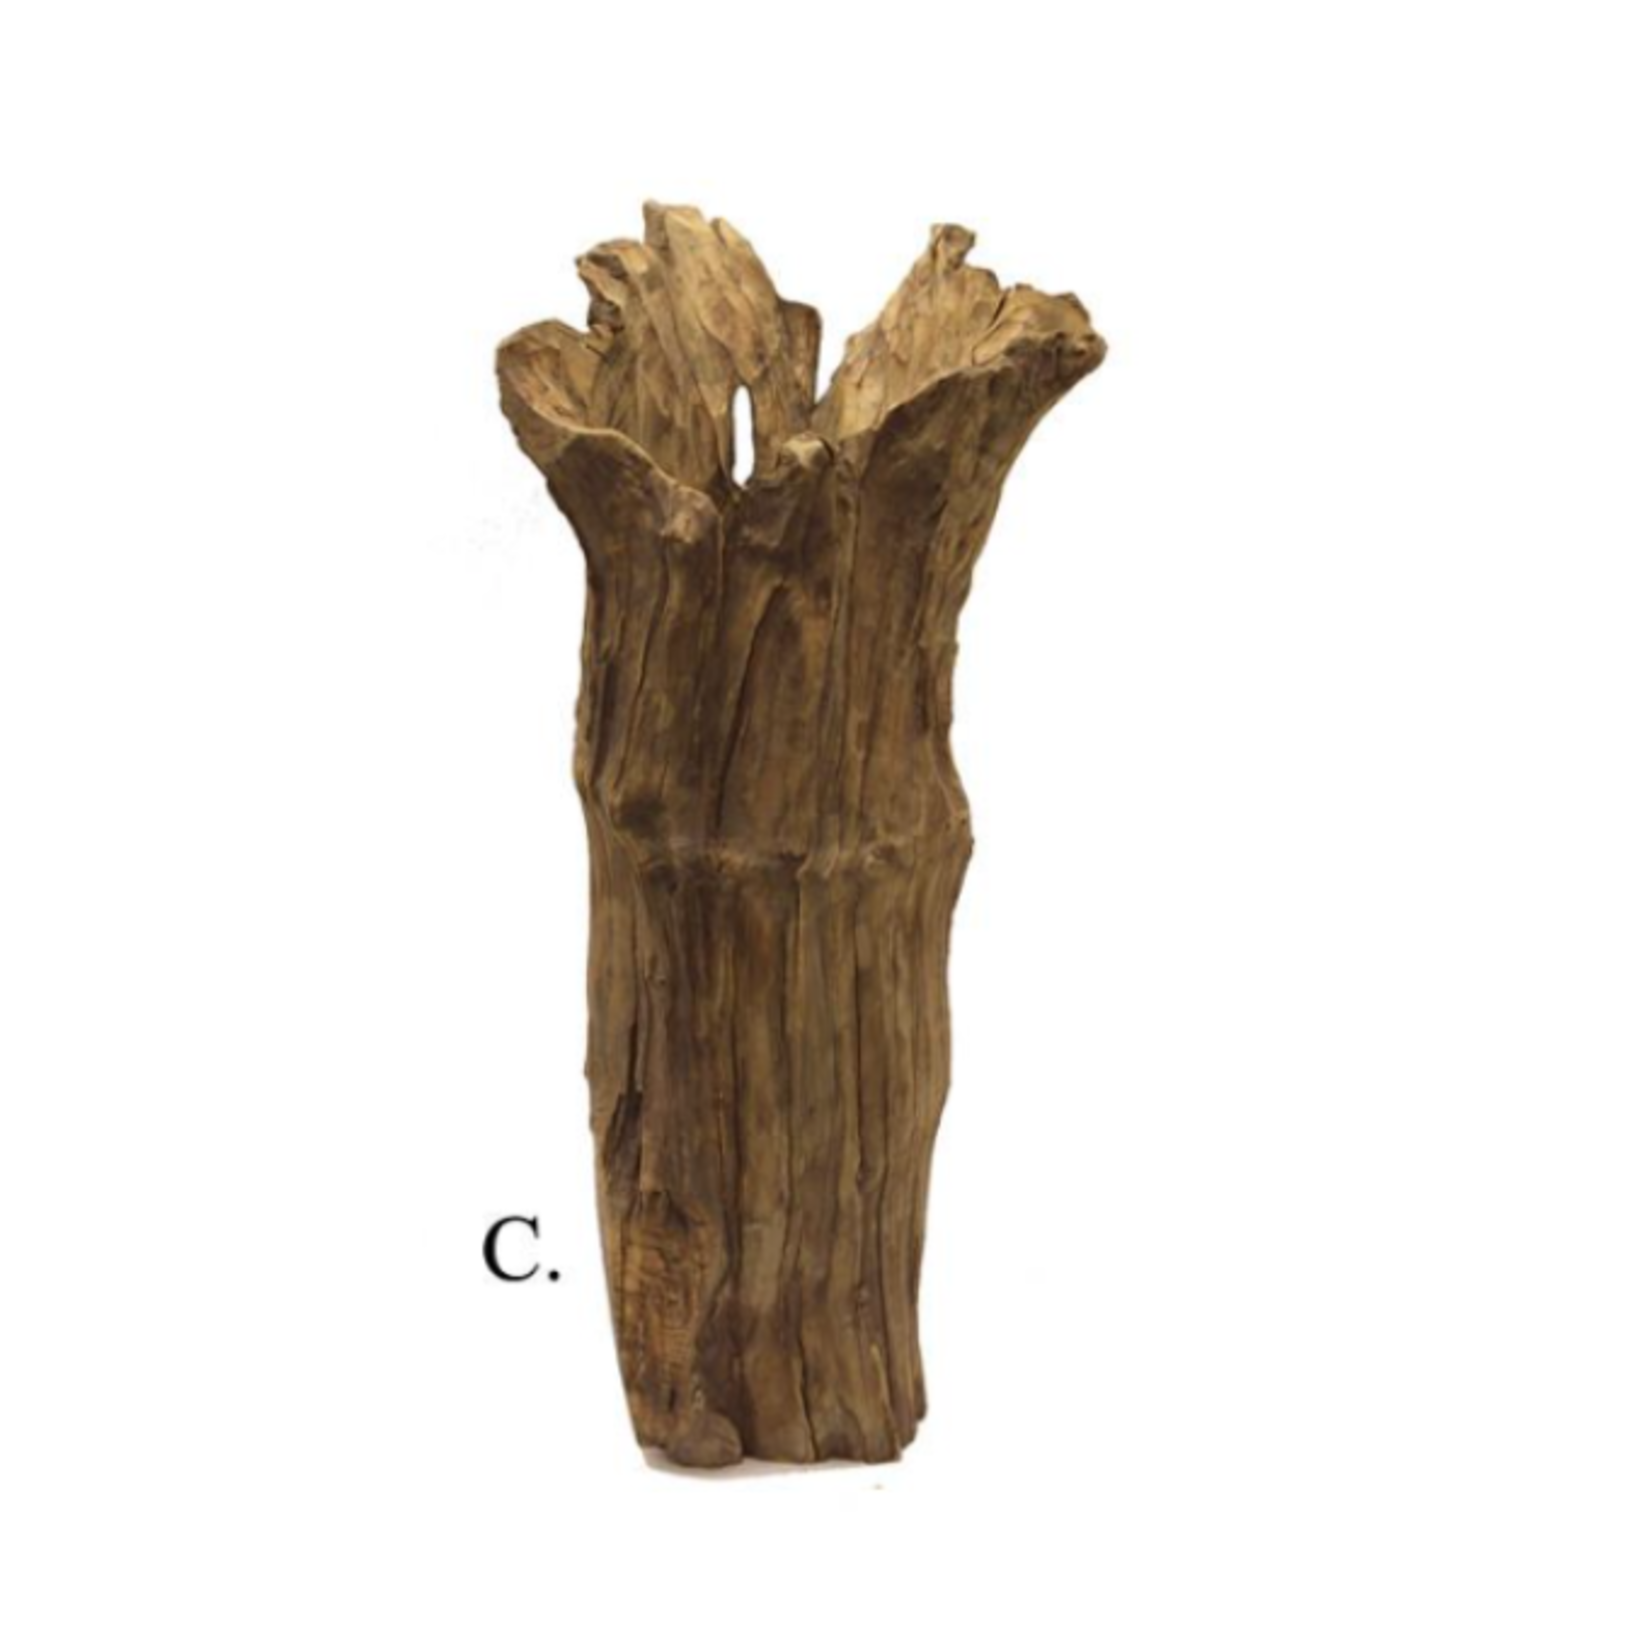 26"H X 12" TOP, 6-8"D Natural Root Vase